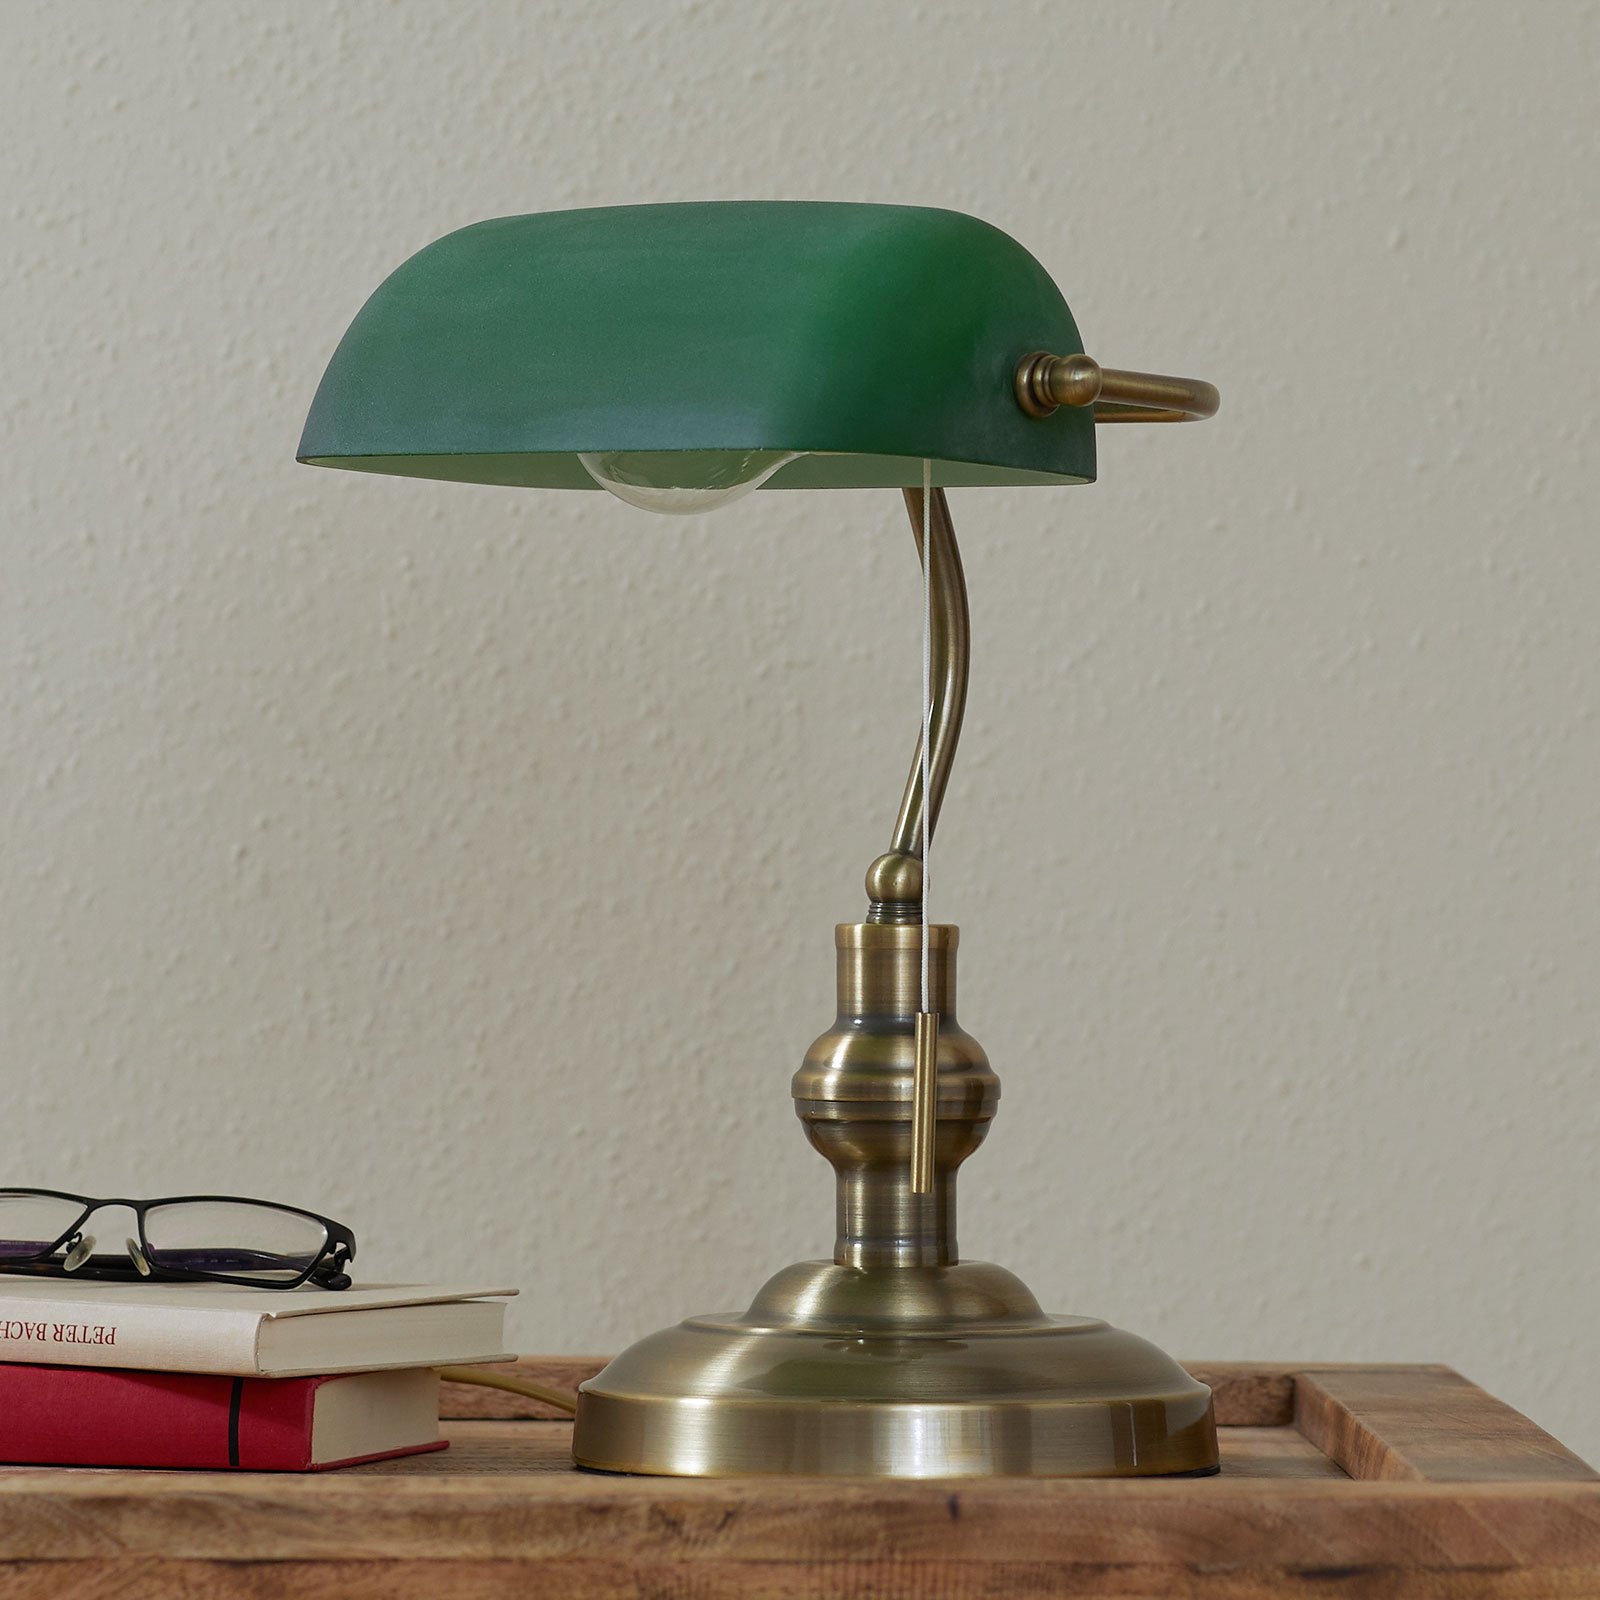 Lampa na písací stôl Milenka so zeleným tienidlom